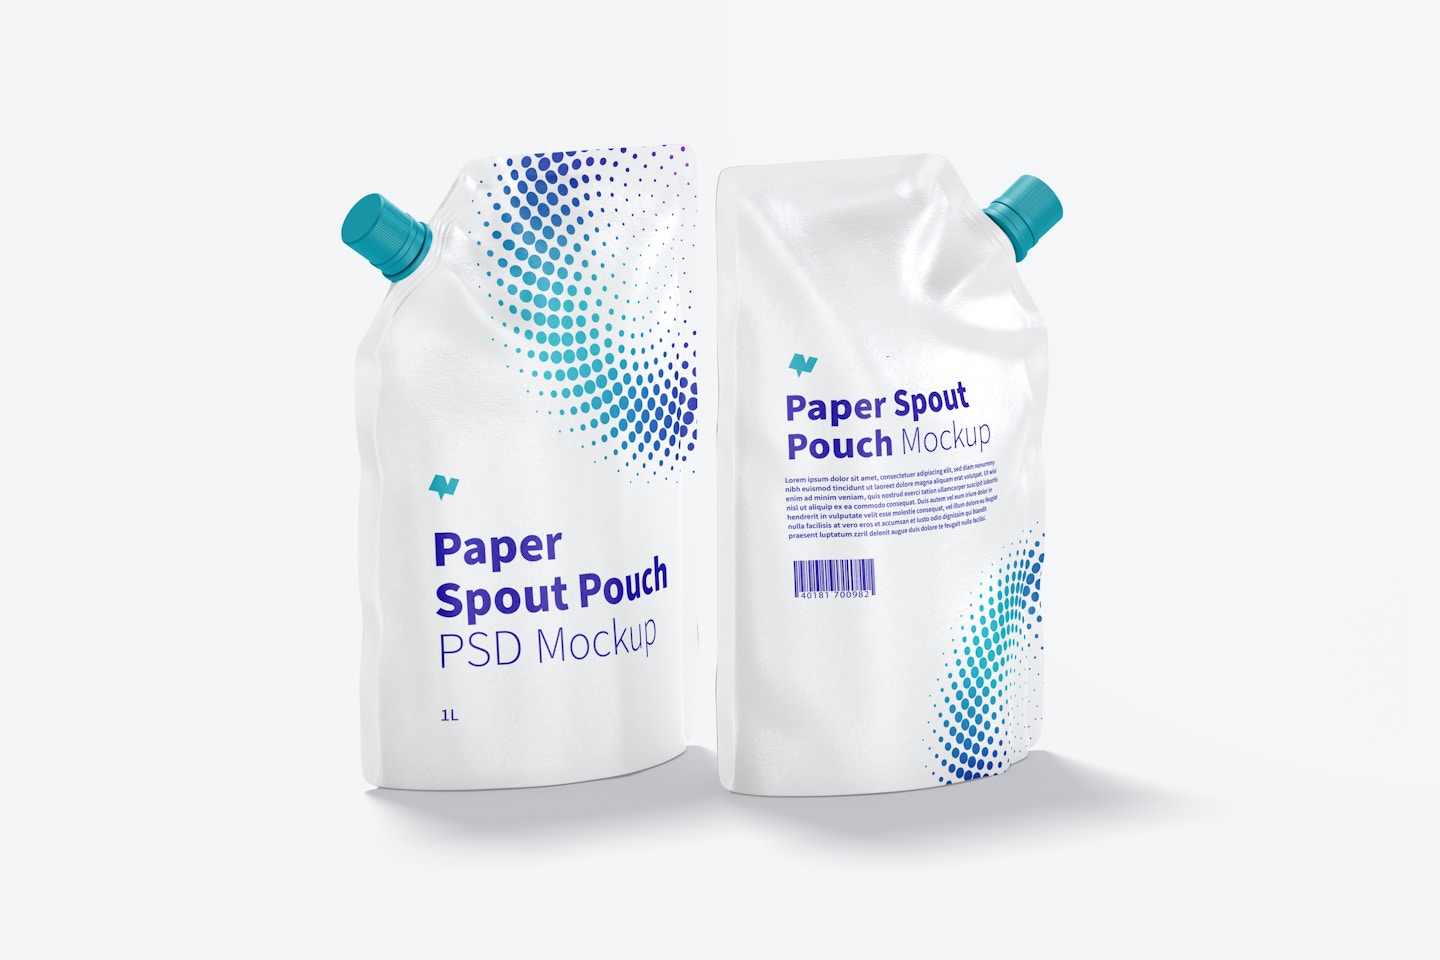 1 Liter Paper Spout Pouch Mockup